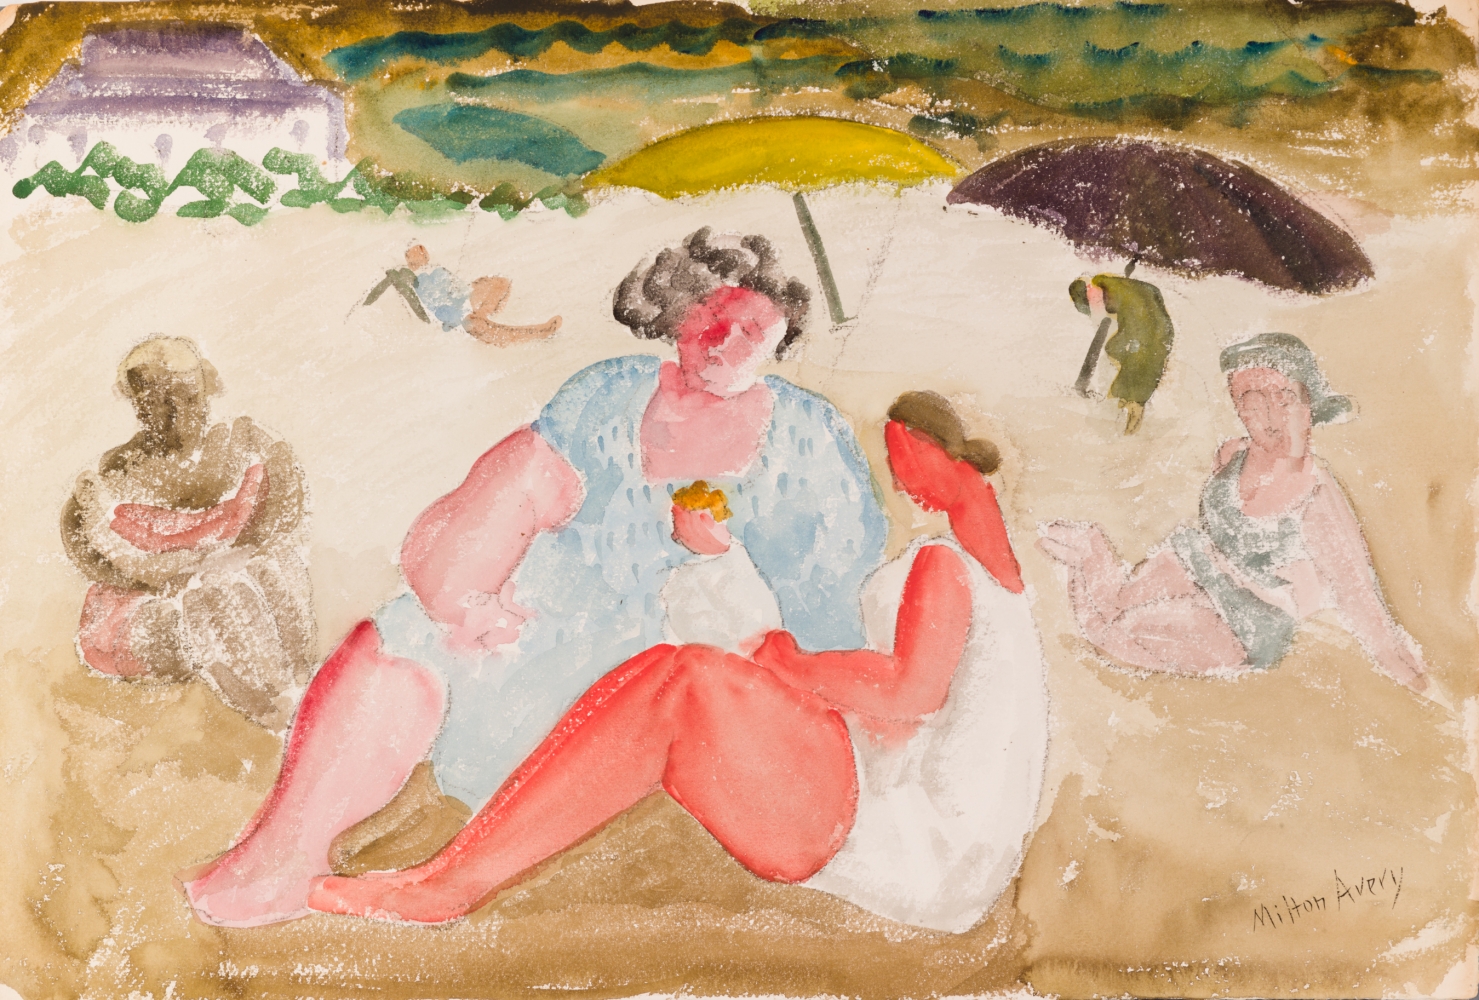 Untitled (Shore Baby), c. 1930